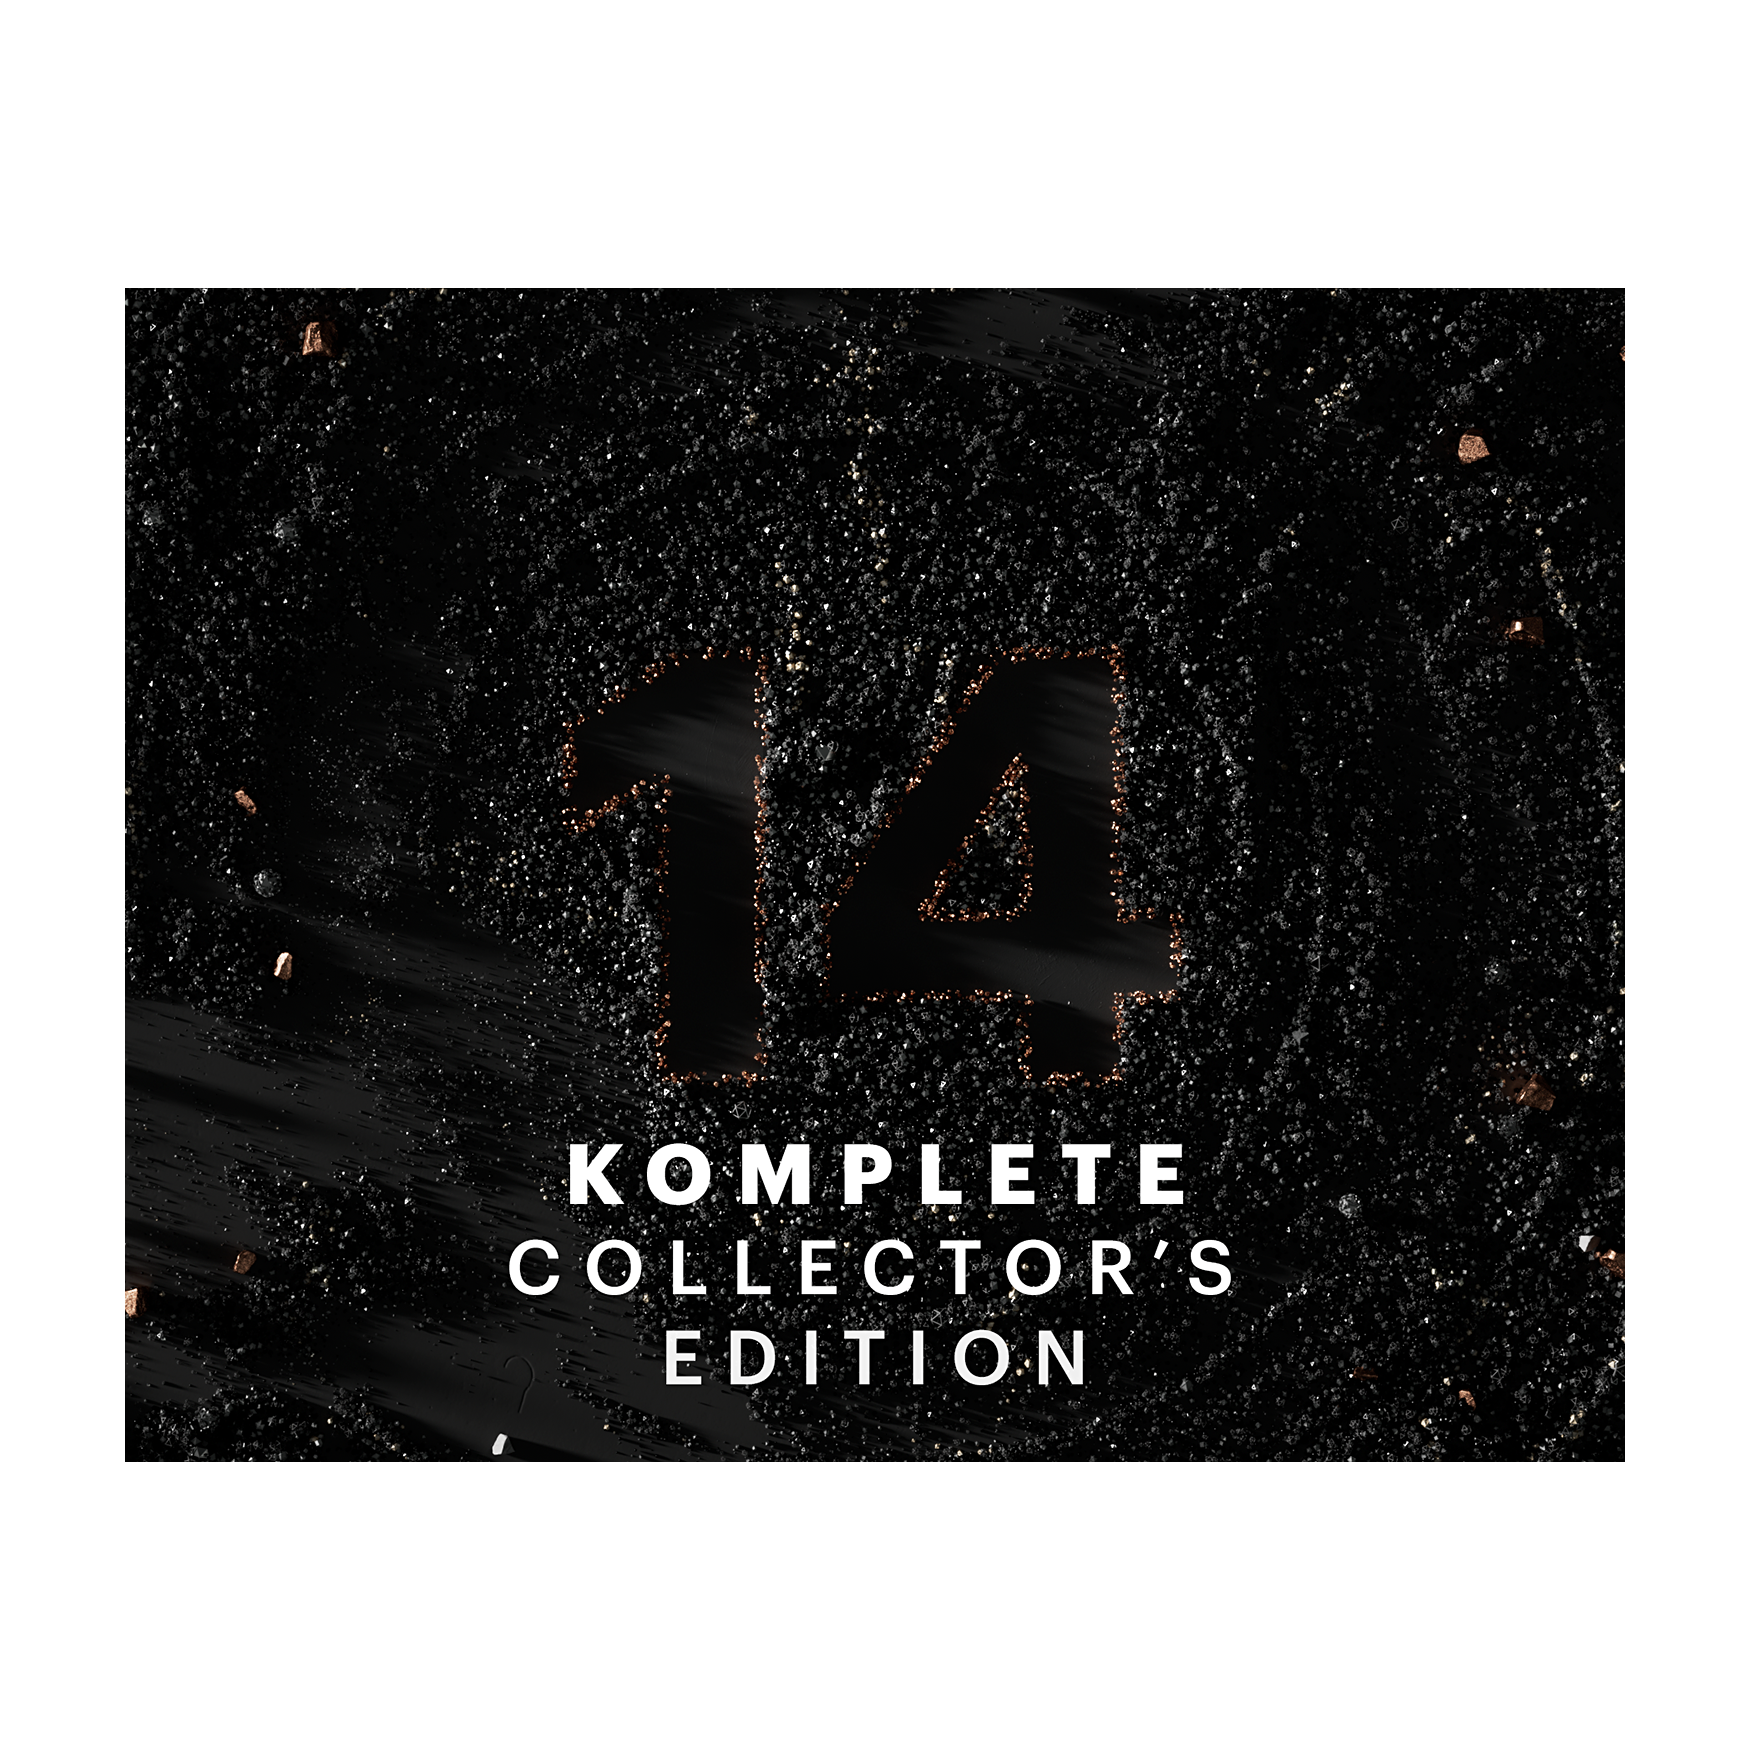 Komplete-14-Collectors-Edition-artwork-logo